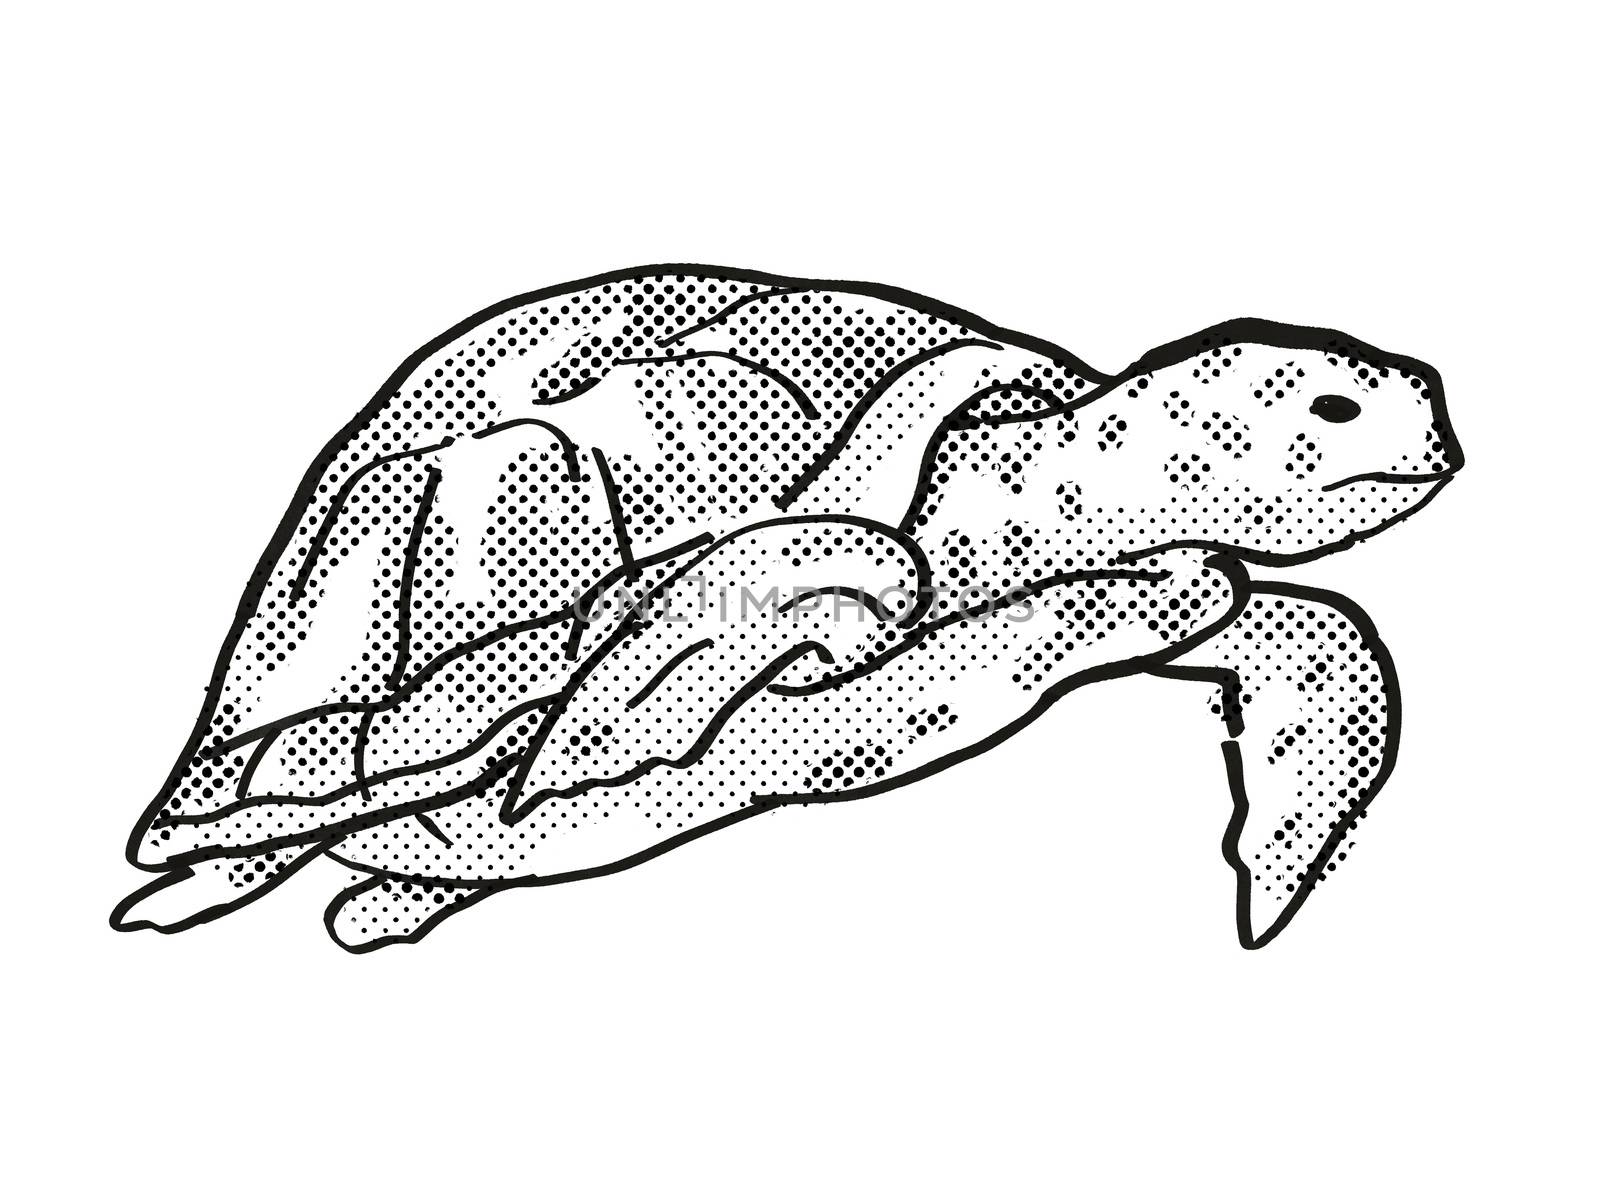 Green Sea Turtle Endangered Wildlife Cartoon Drawing by patrimonio